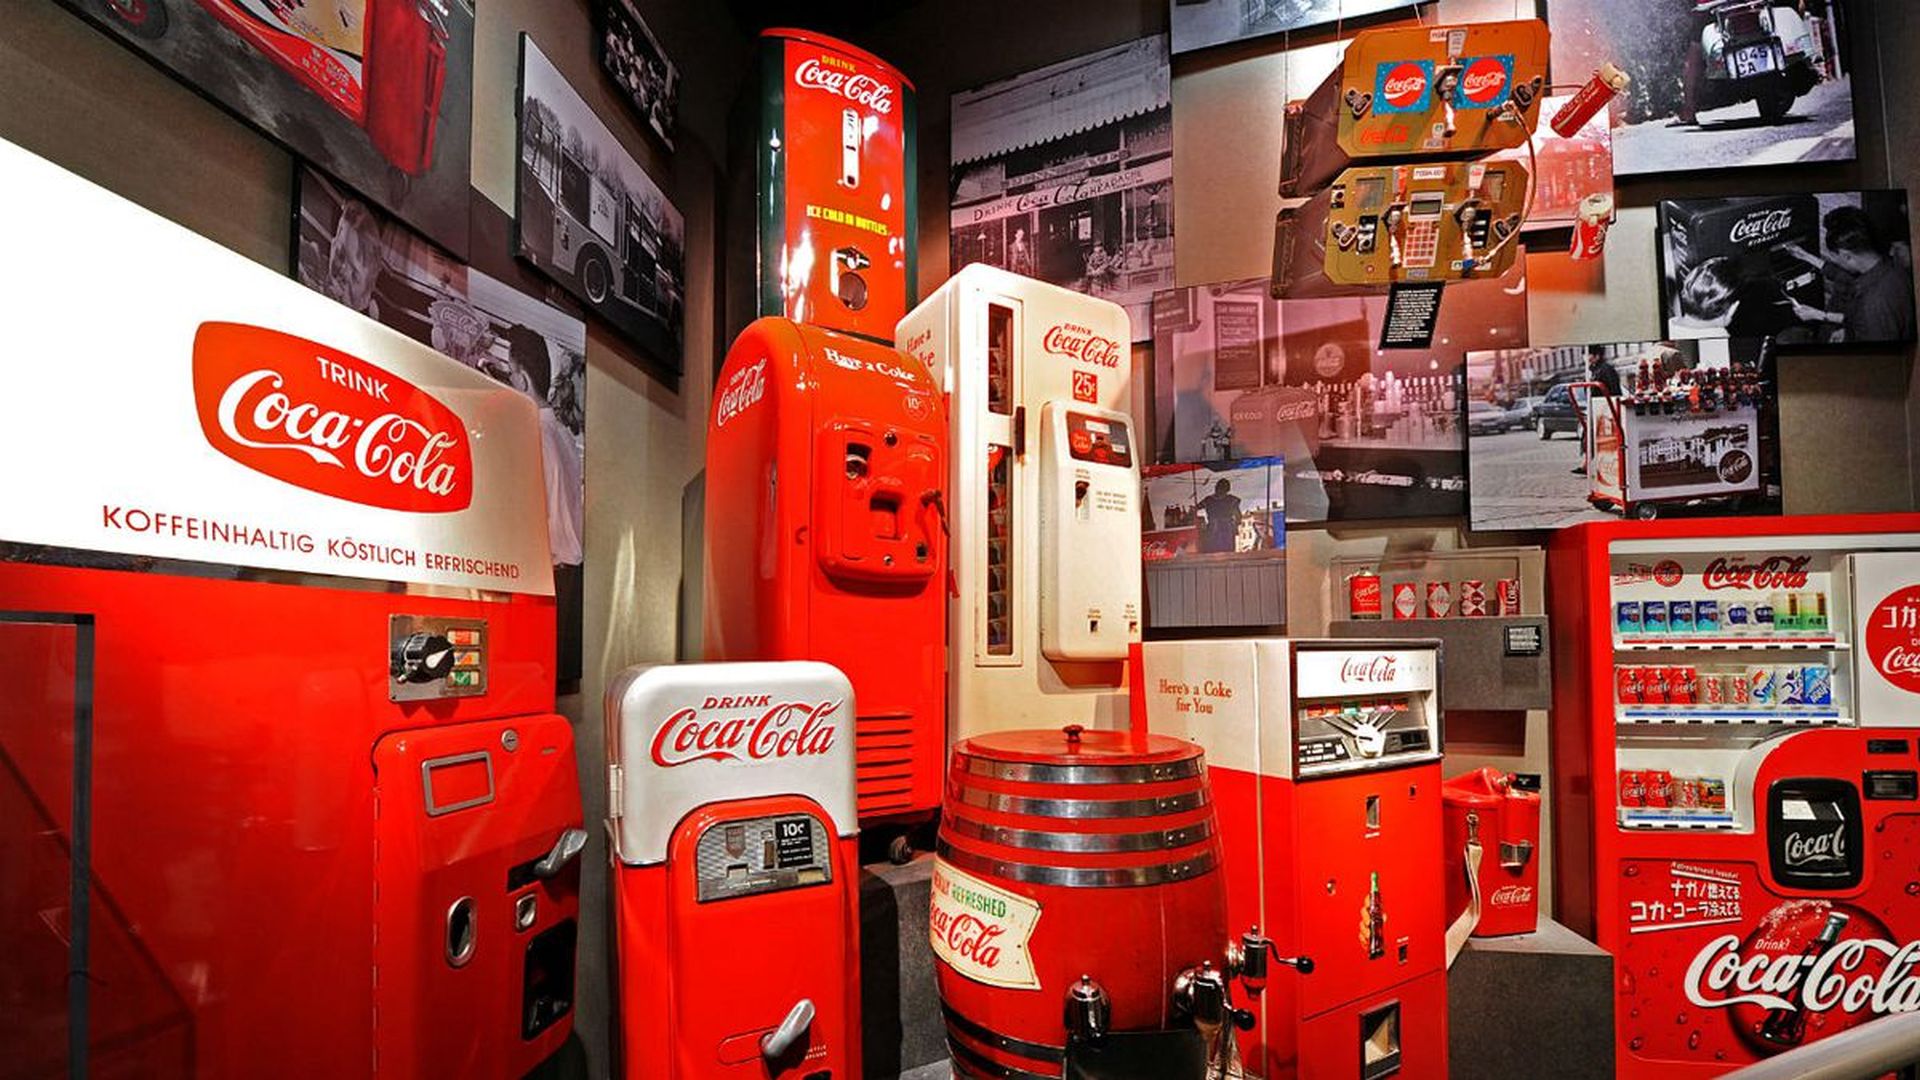 New (6) Coke Coca Cola Restaurant Red Plastic Tumblers Cups 16oz Carlisle 